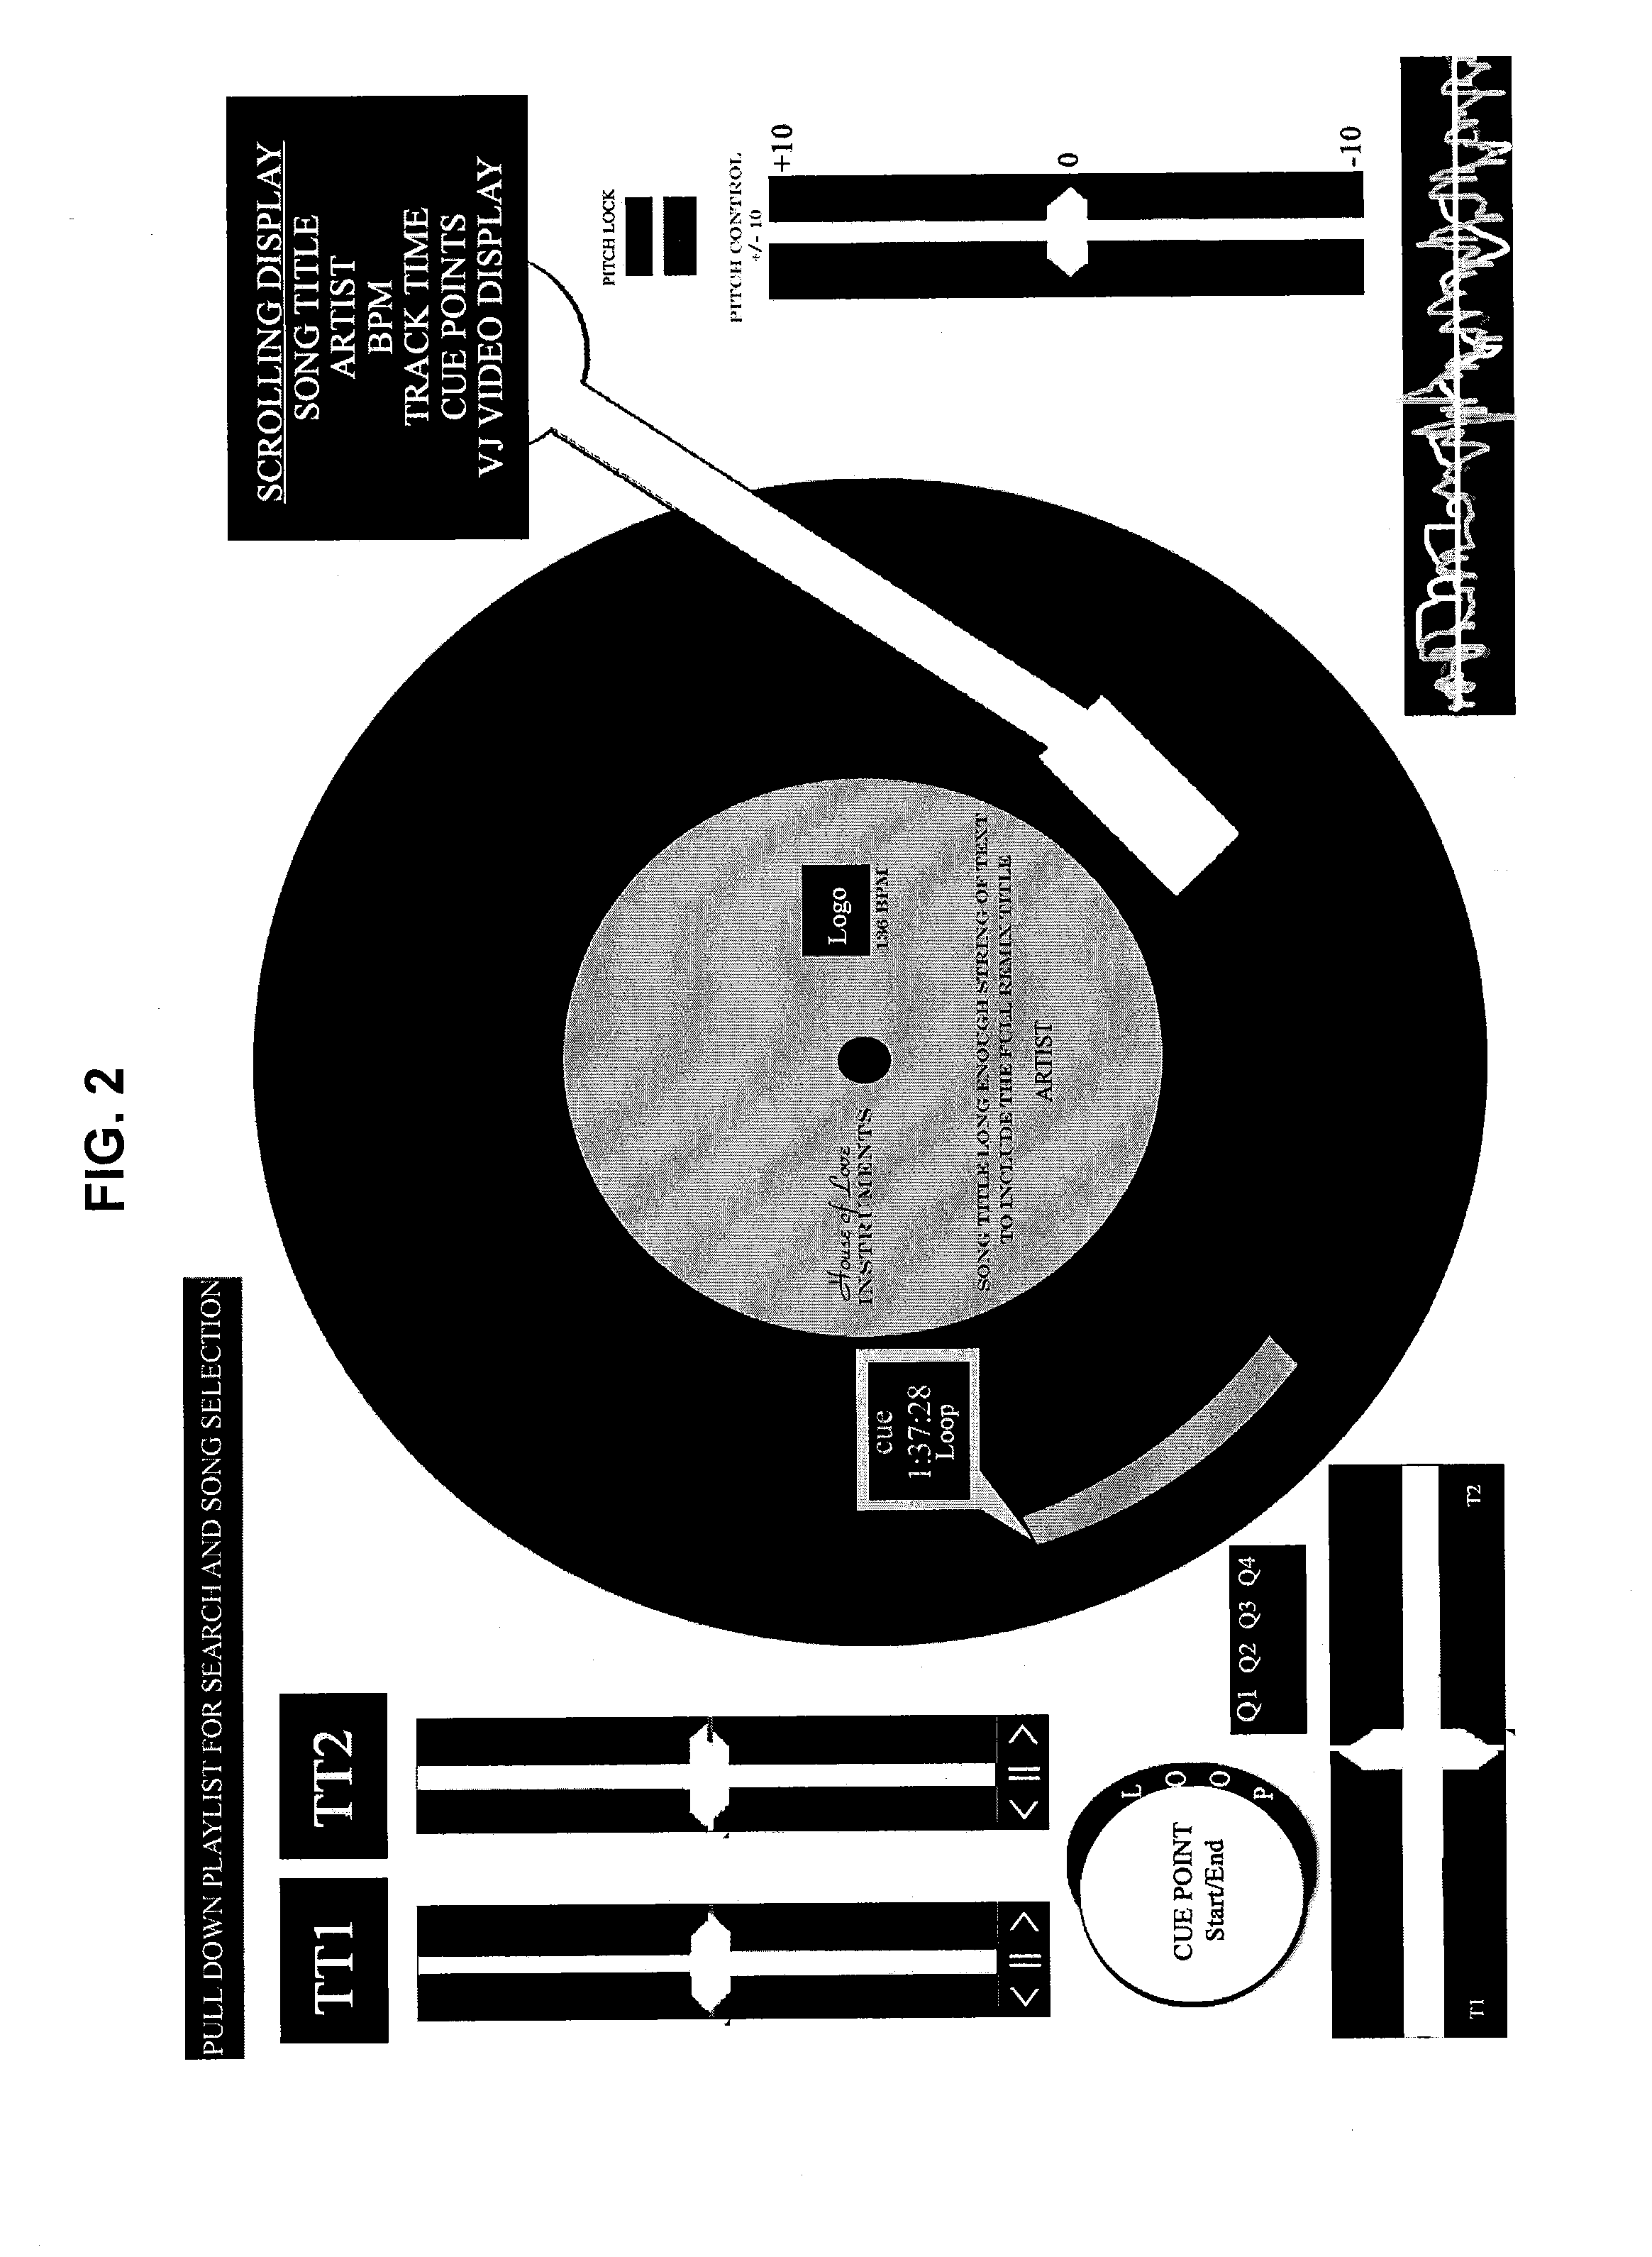 Virtual phonograph